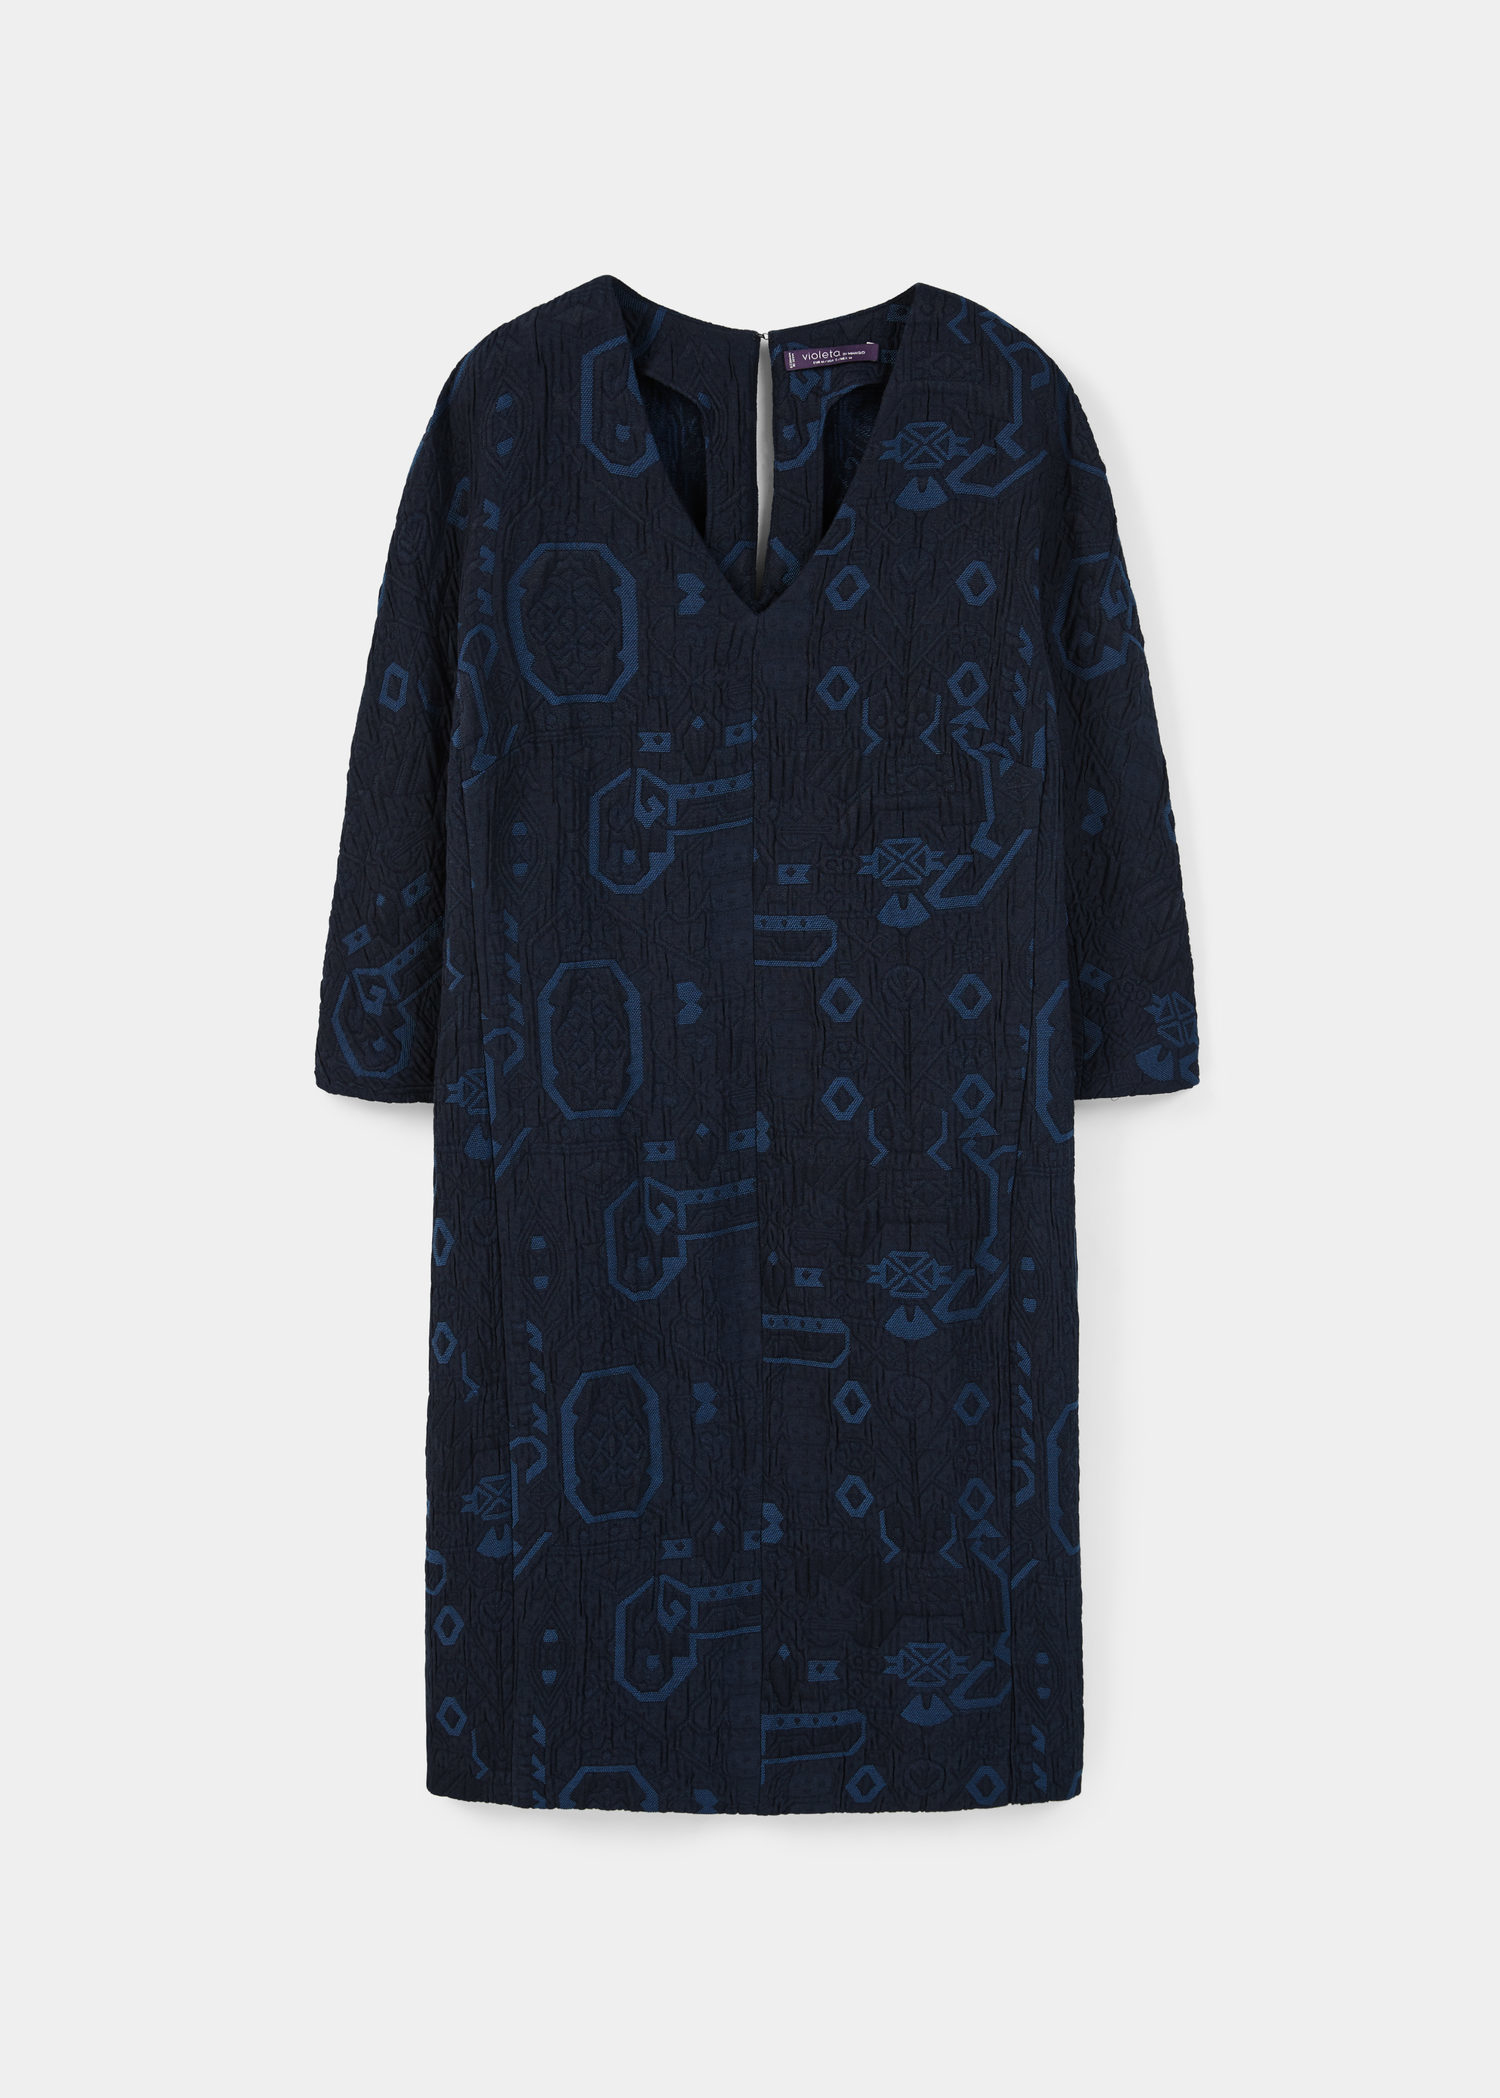 Violeta by mango Textured Jacquard Dress in Blue | Lyst